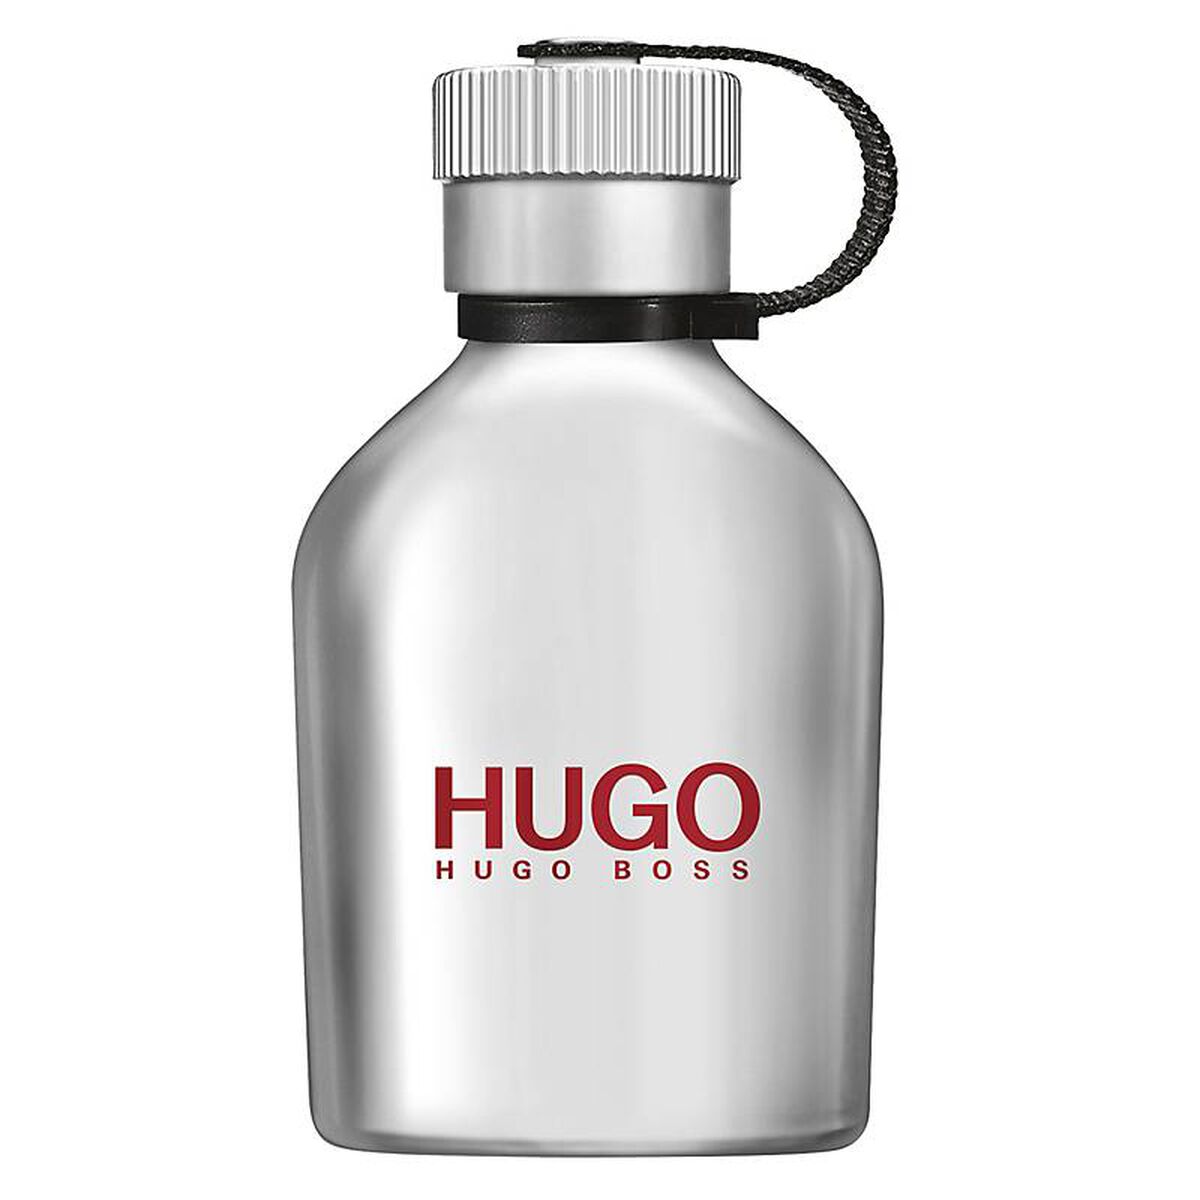 Perfume Iced Hugo Boss 75 ml